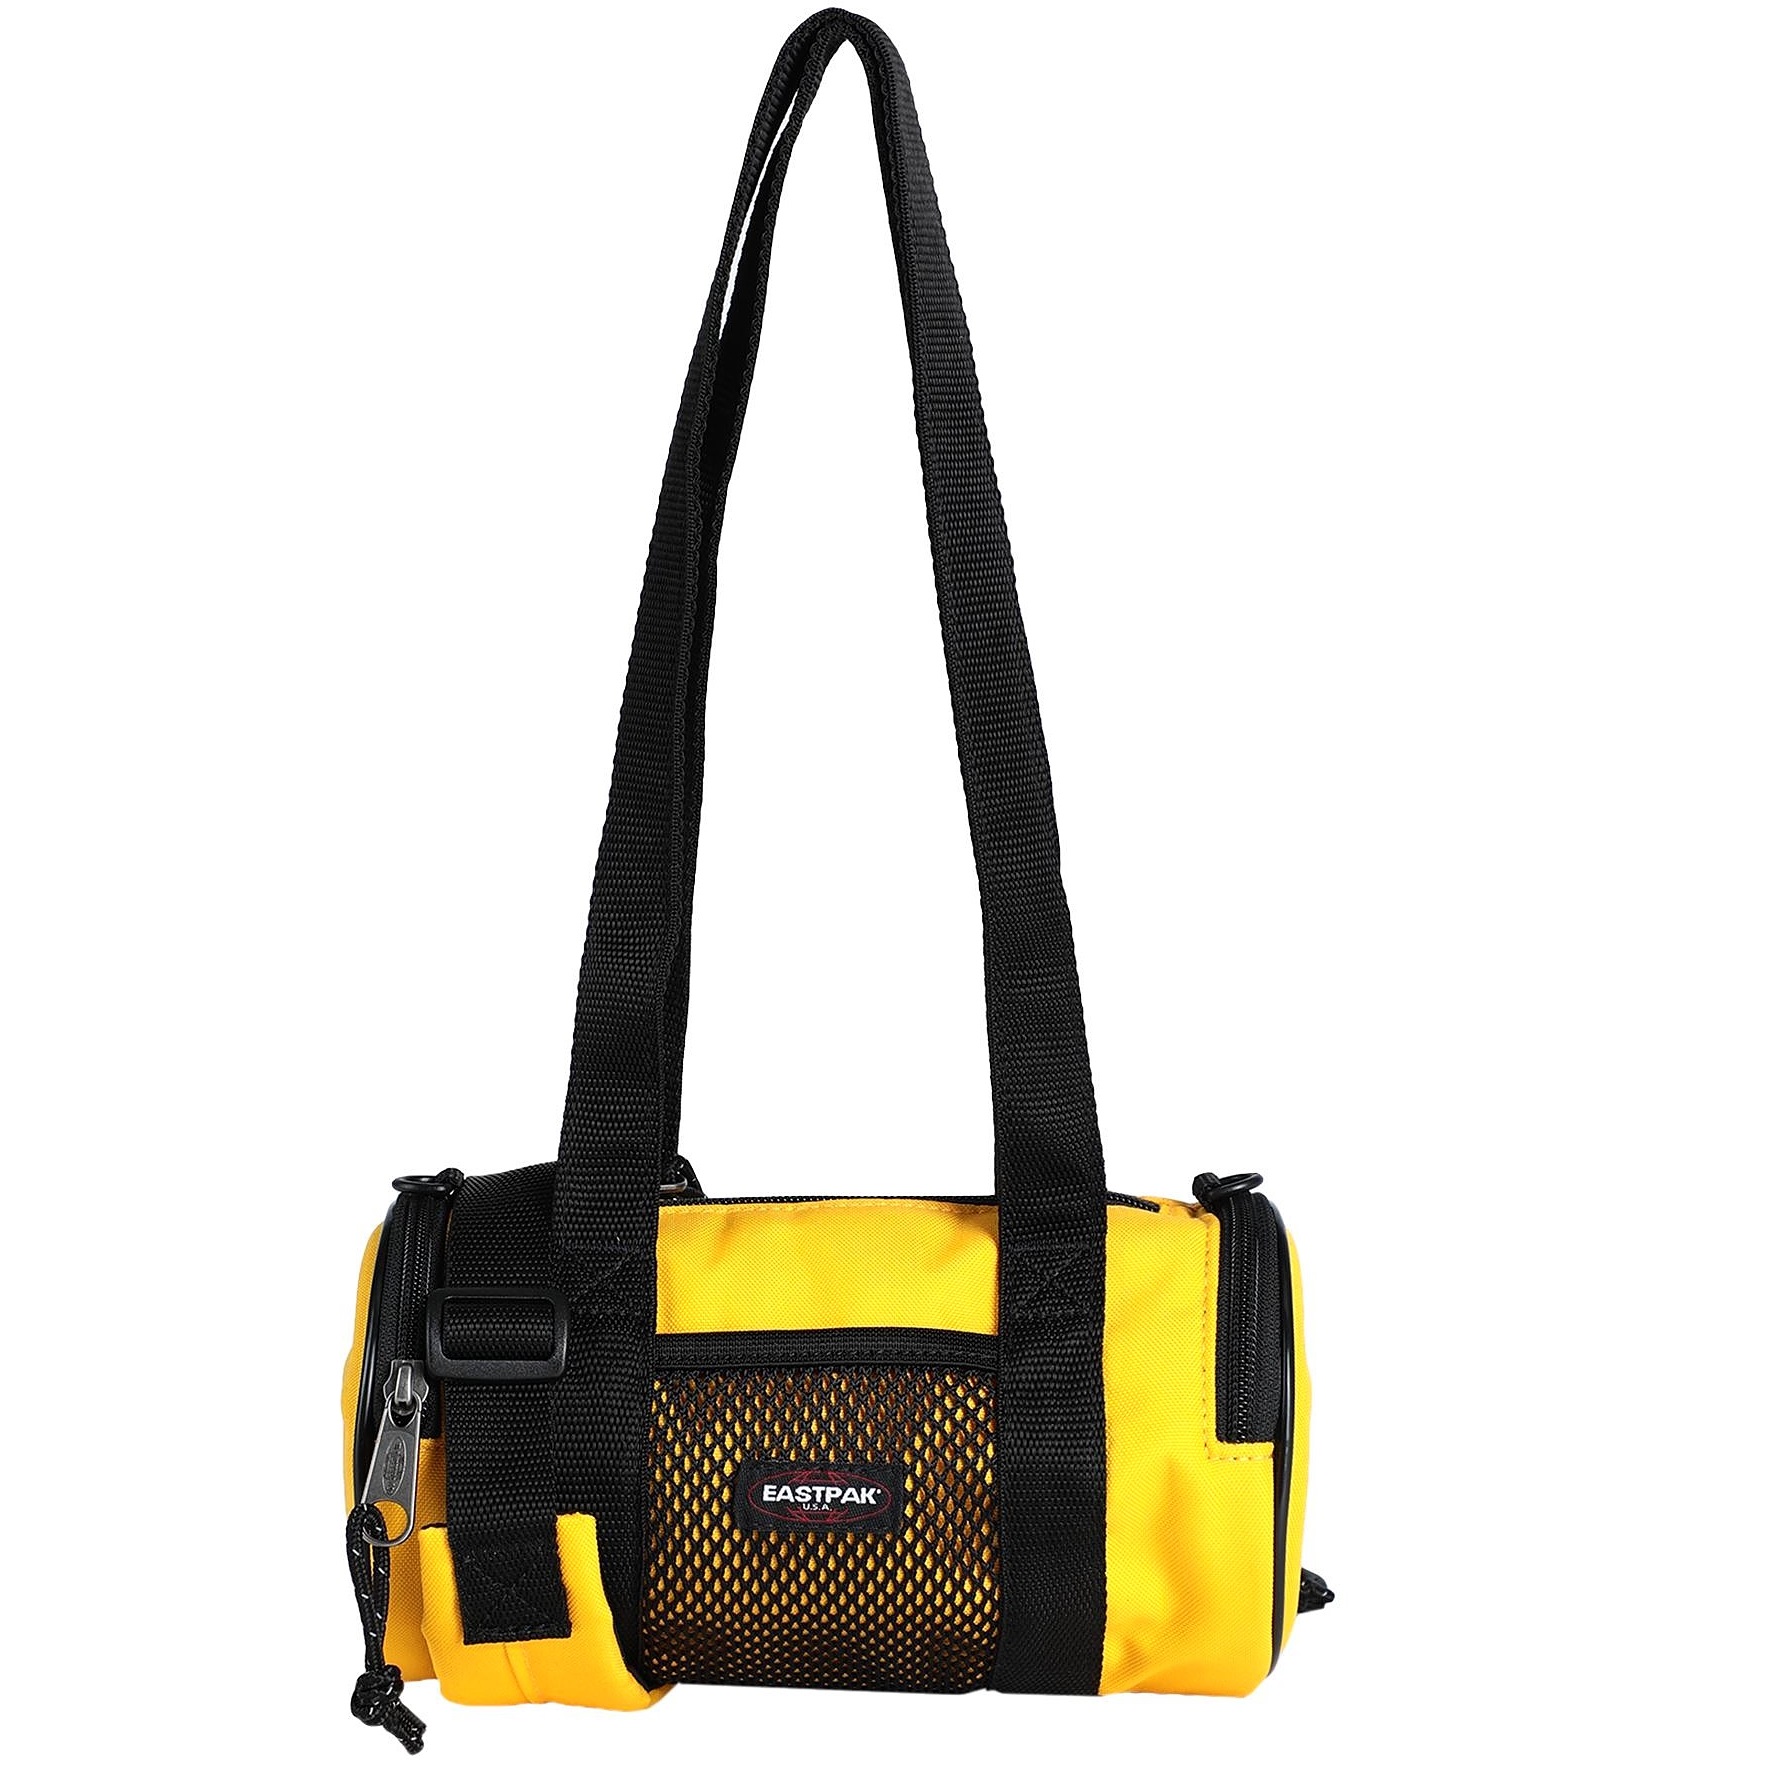 Спортивная сумка Eastpak X Telfar Telfar Duffle S, желтый